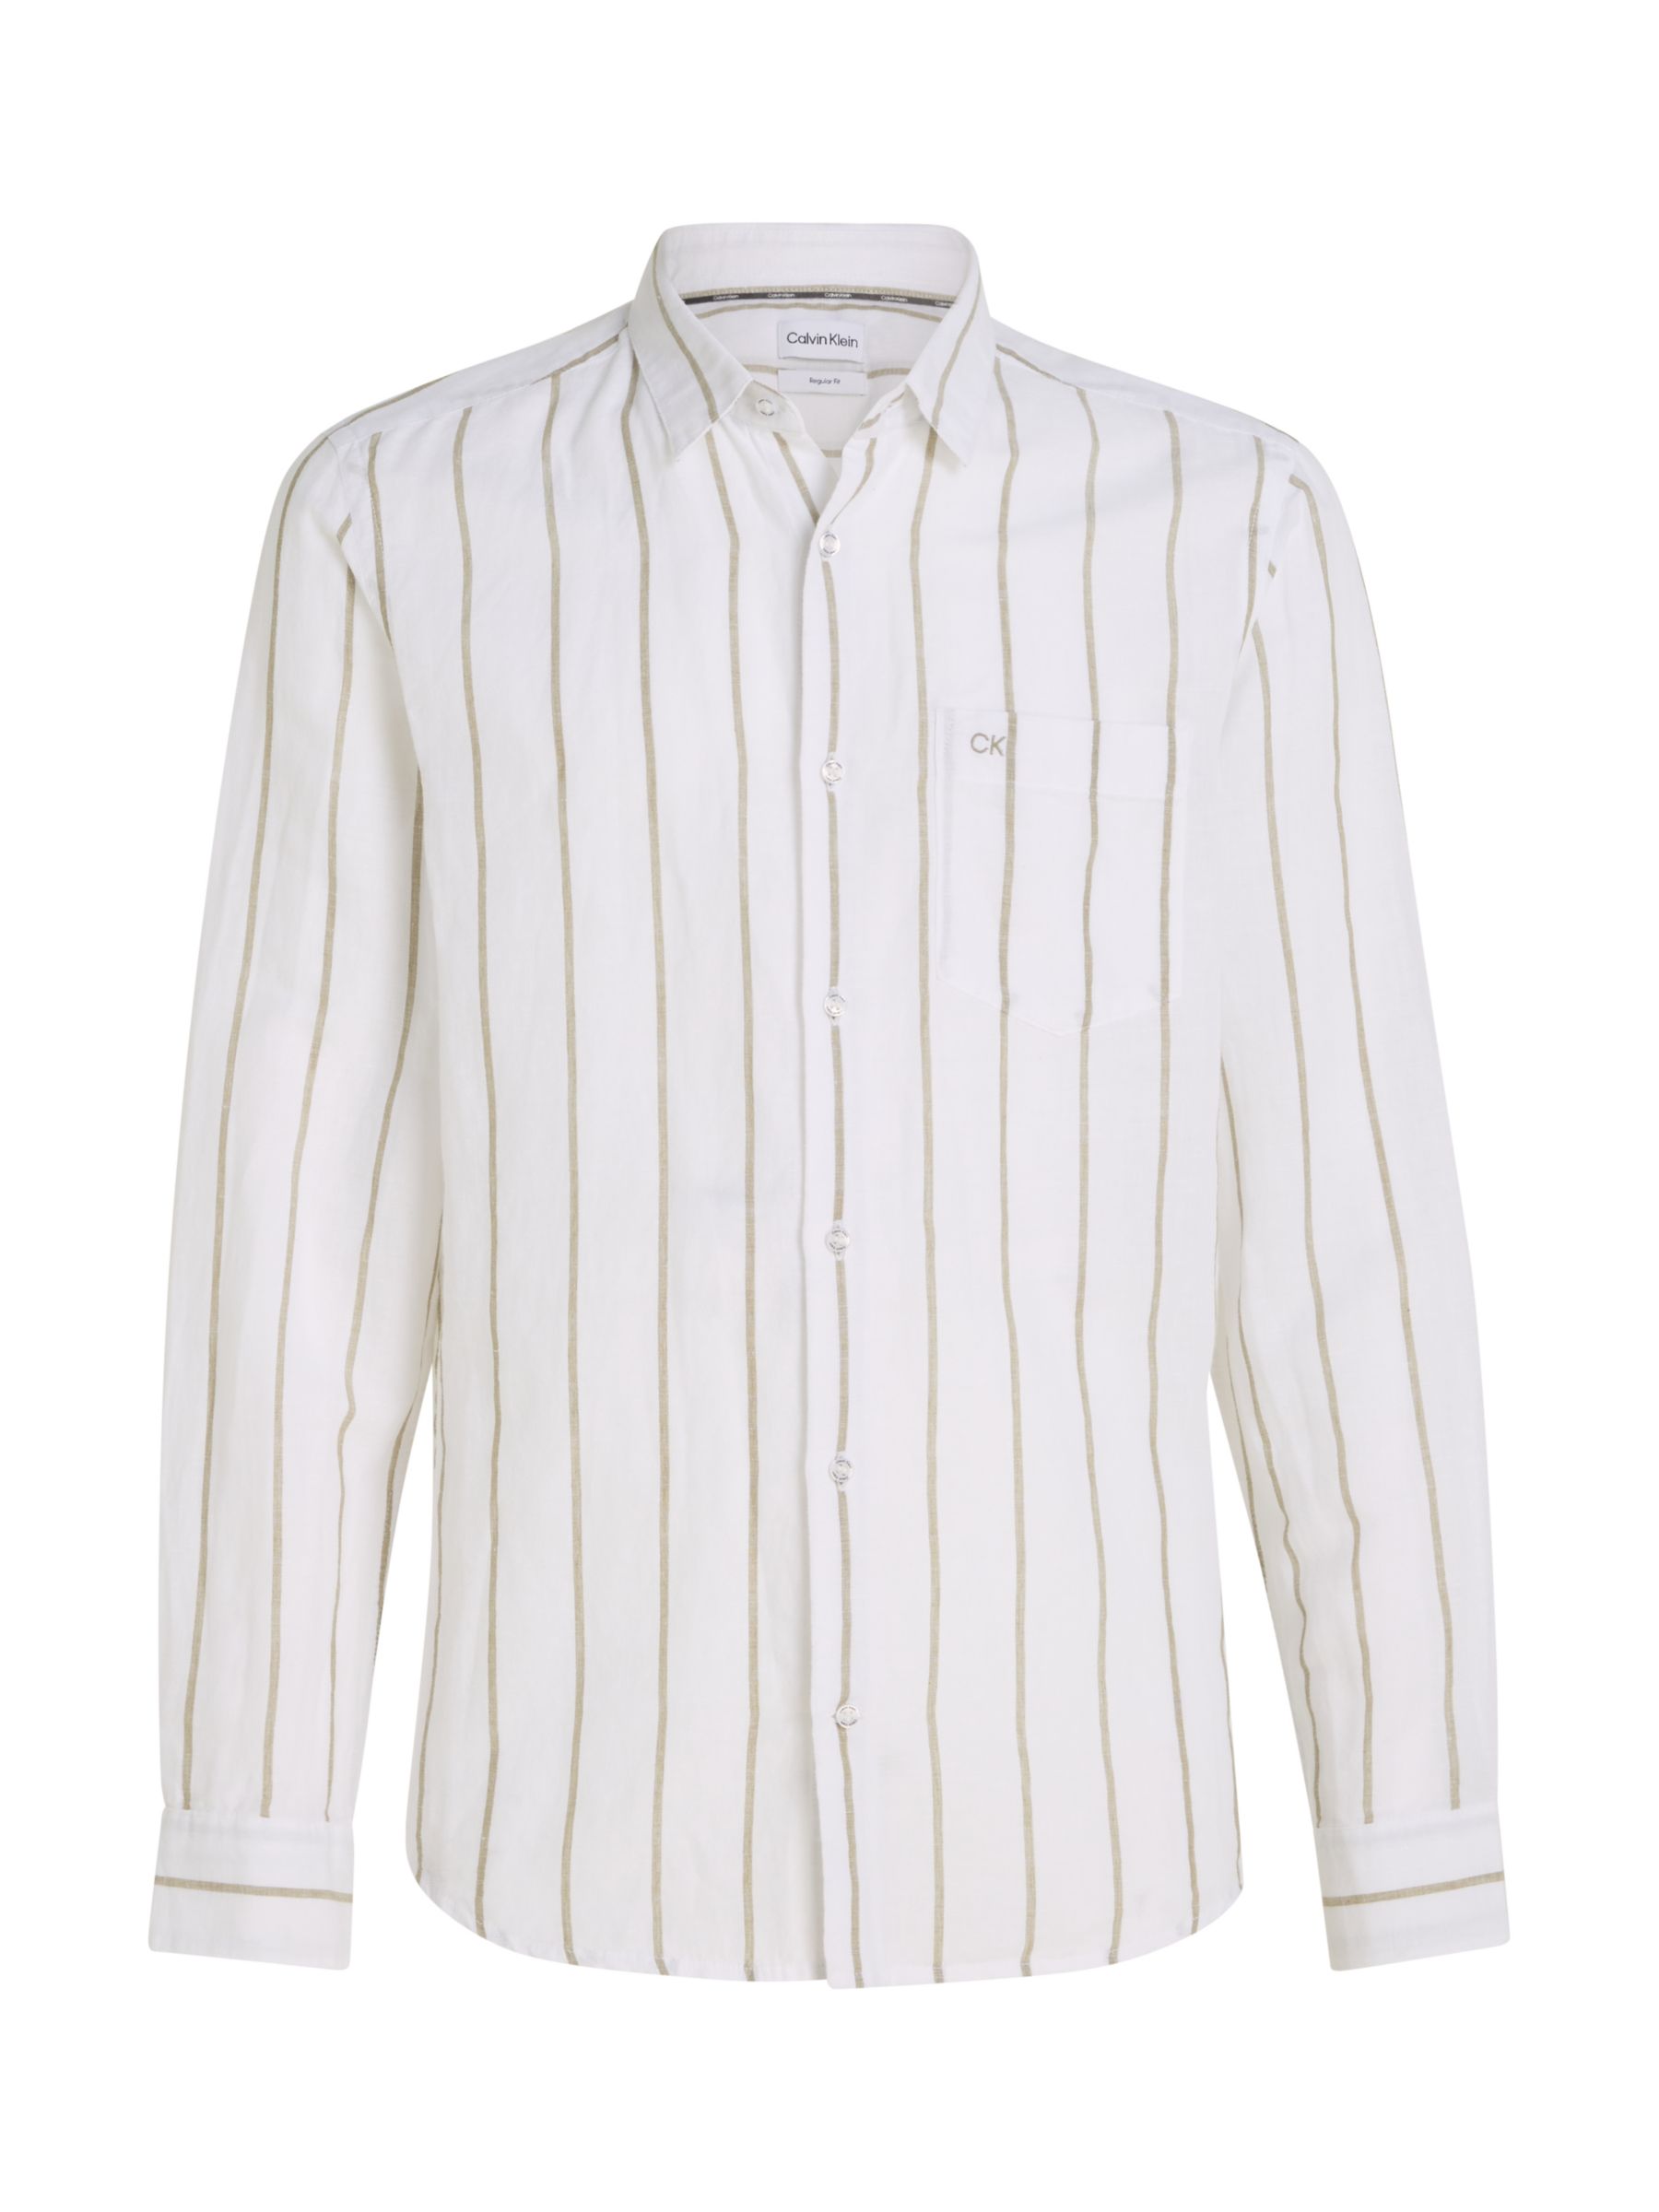 Calvin Klein Linen Blend Stripe Shirt, White/Delta Green, S